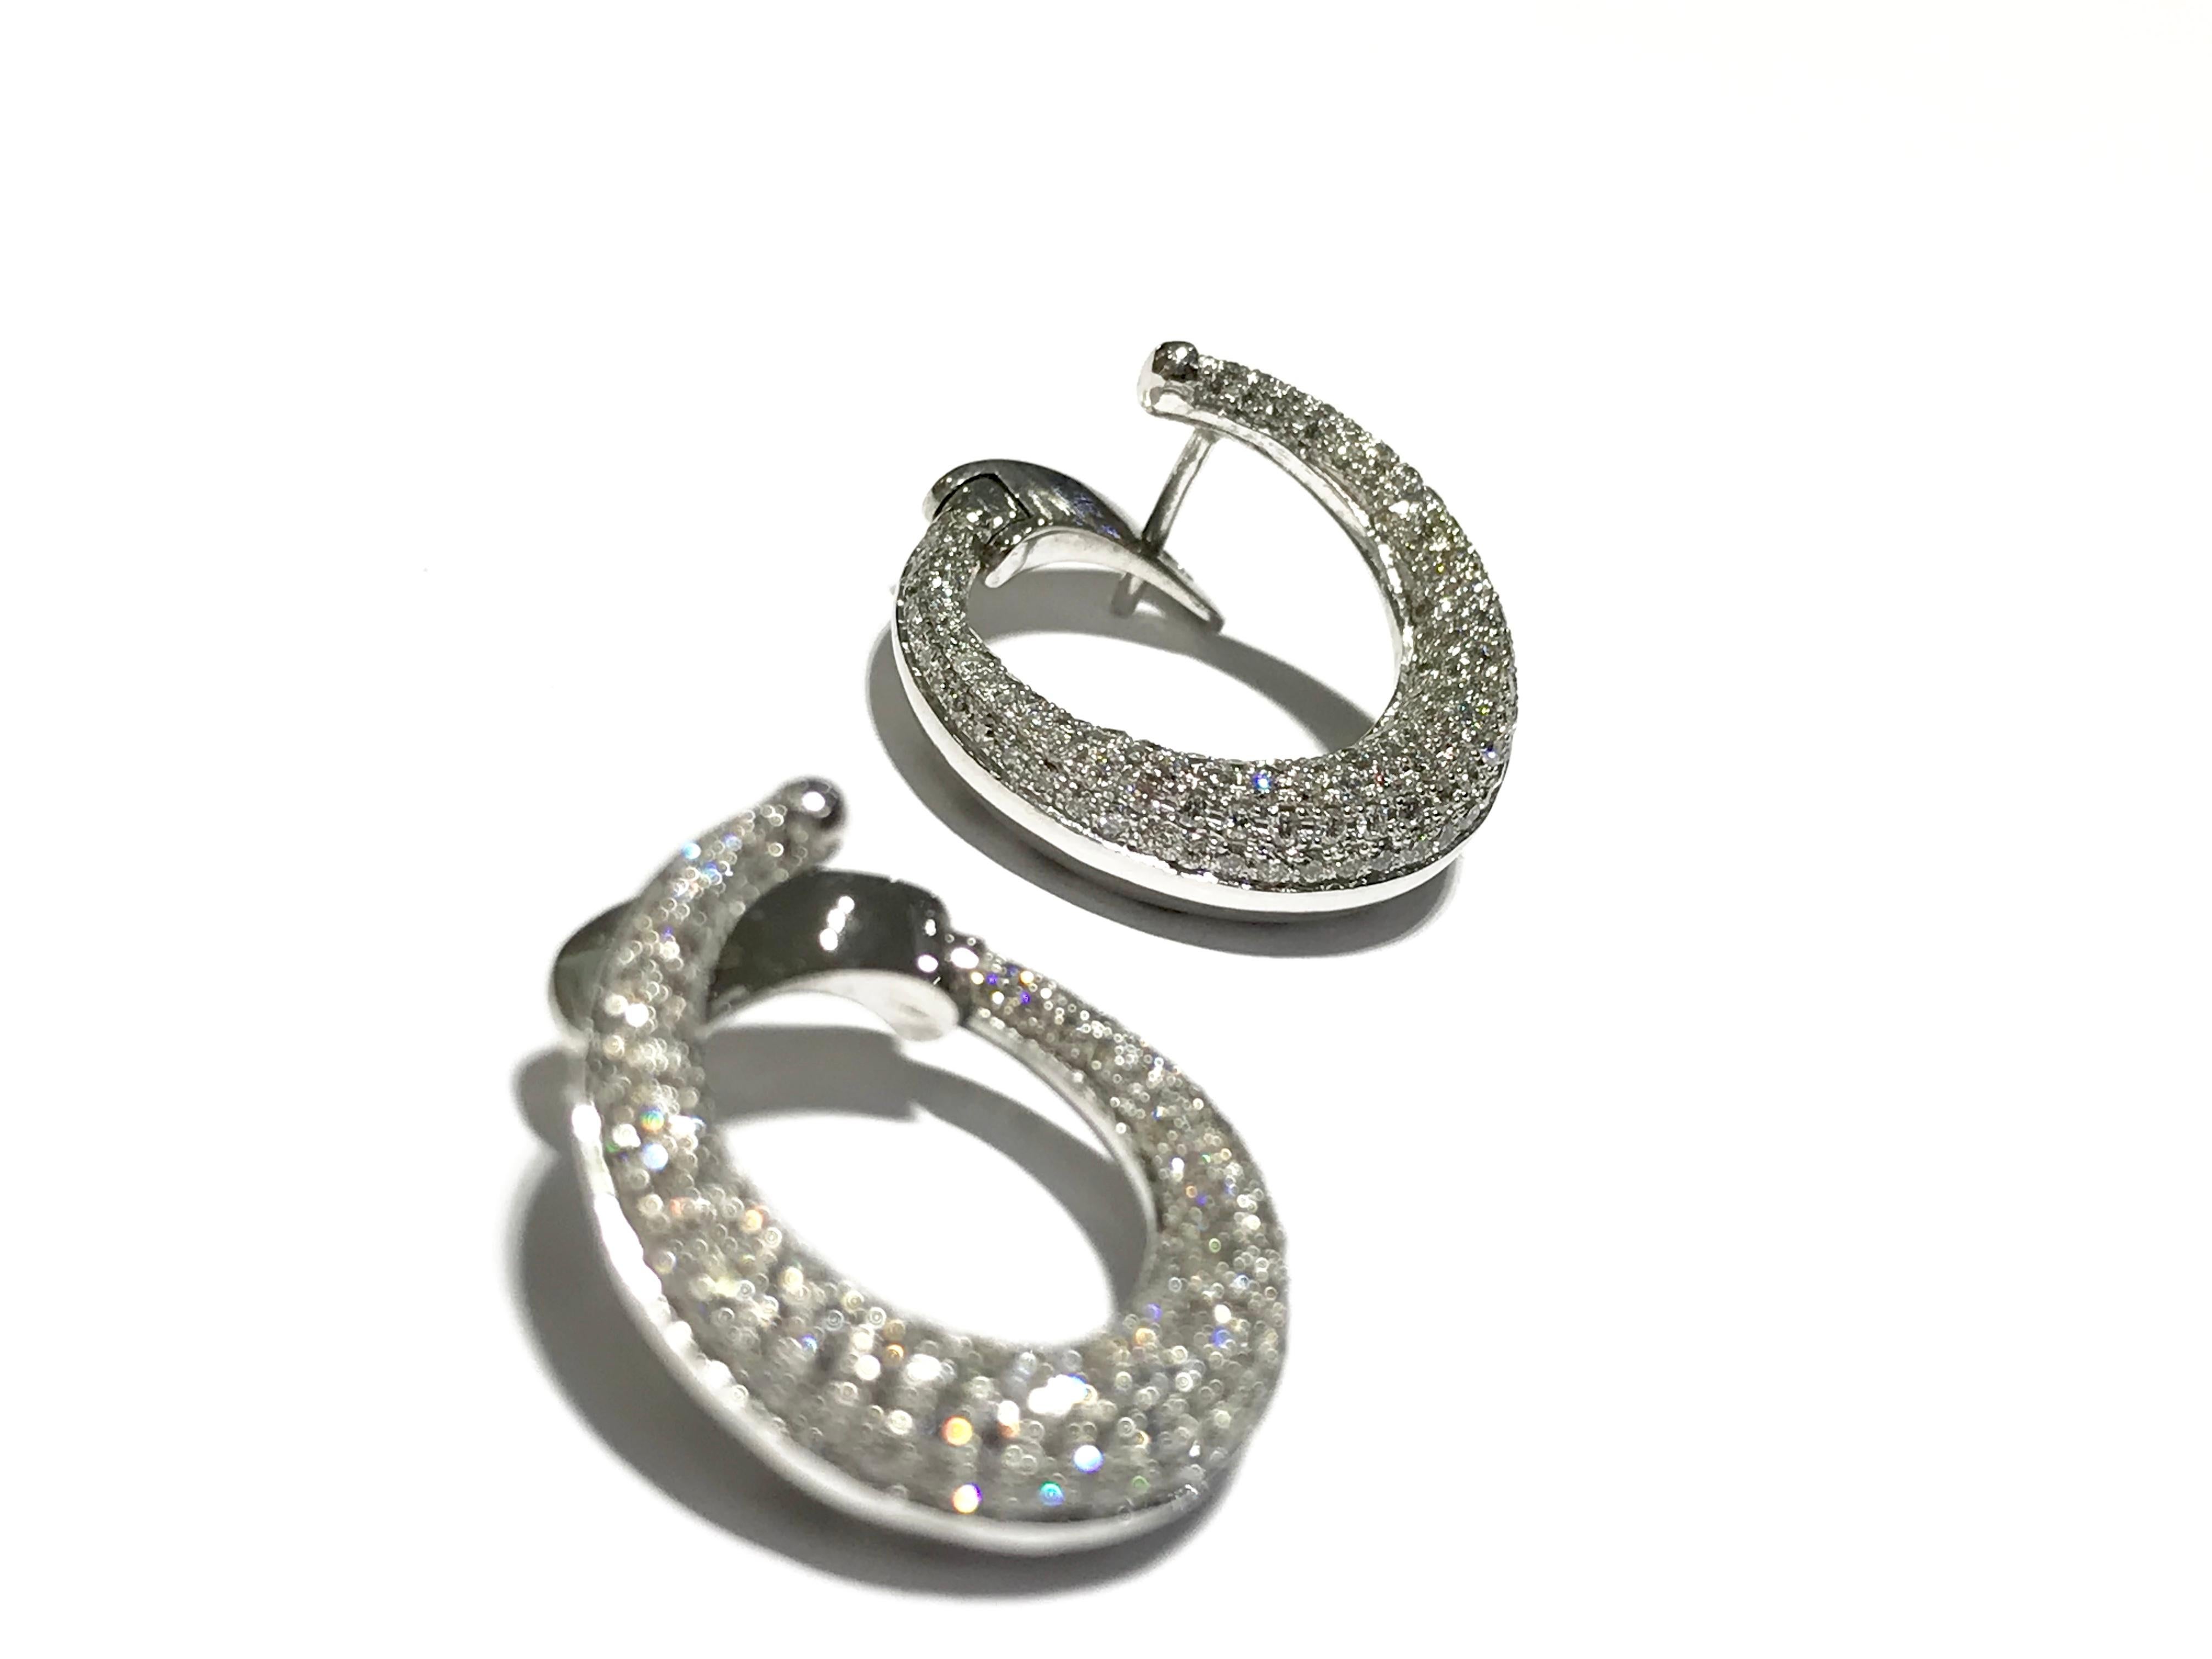 Crivelli C shaped diamond earrings with 2.30 carat diamonds VS clarity EF colour
18 karat white gold 
Italian Made 
Pave diamond style 